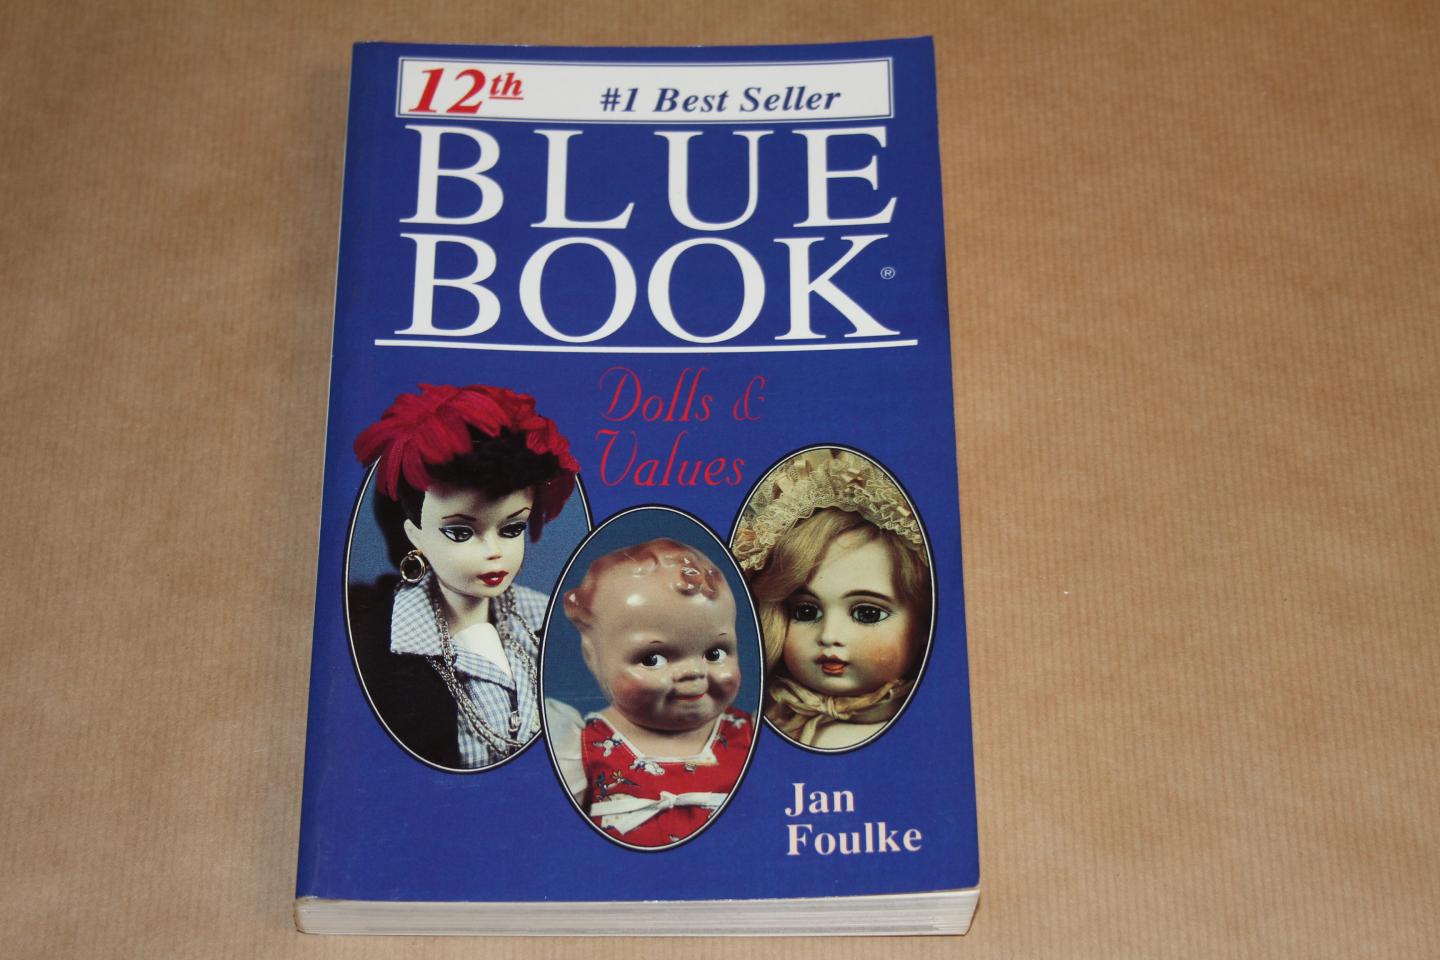 Jan Foulke - 12th Blue Book - Dolls & Values